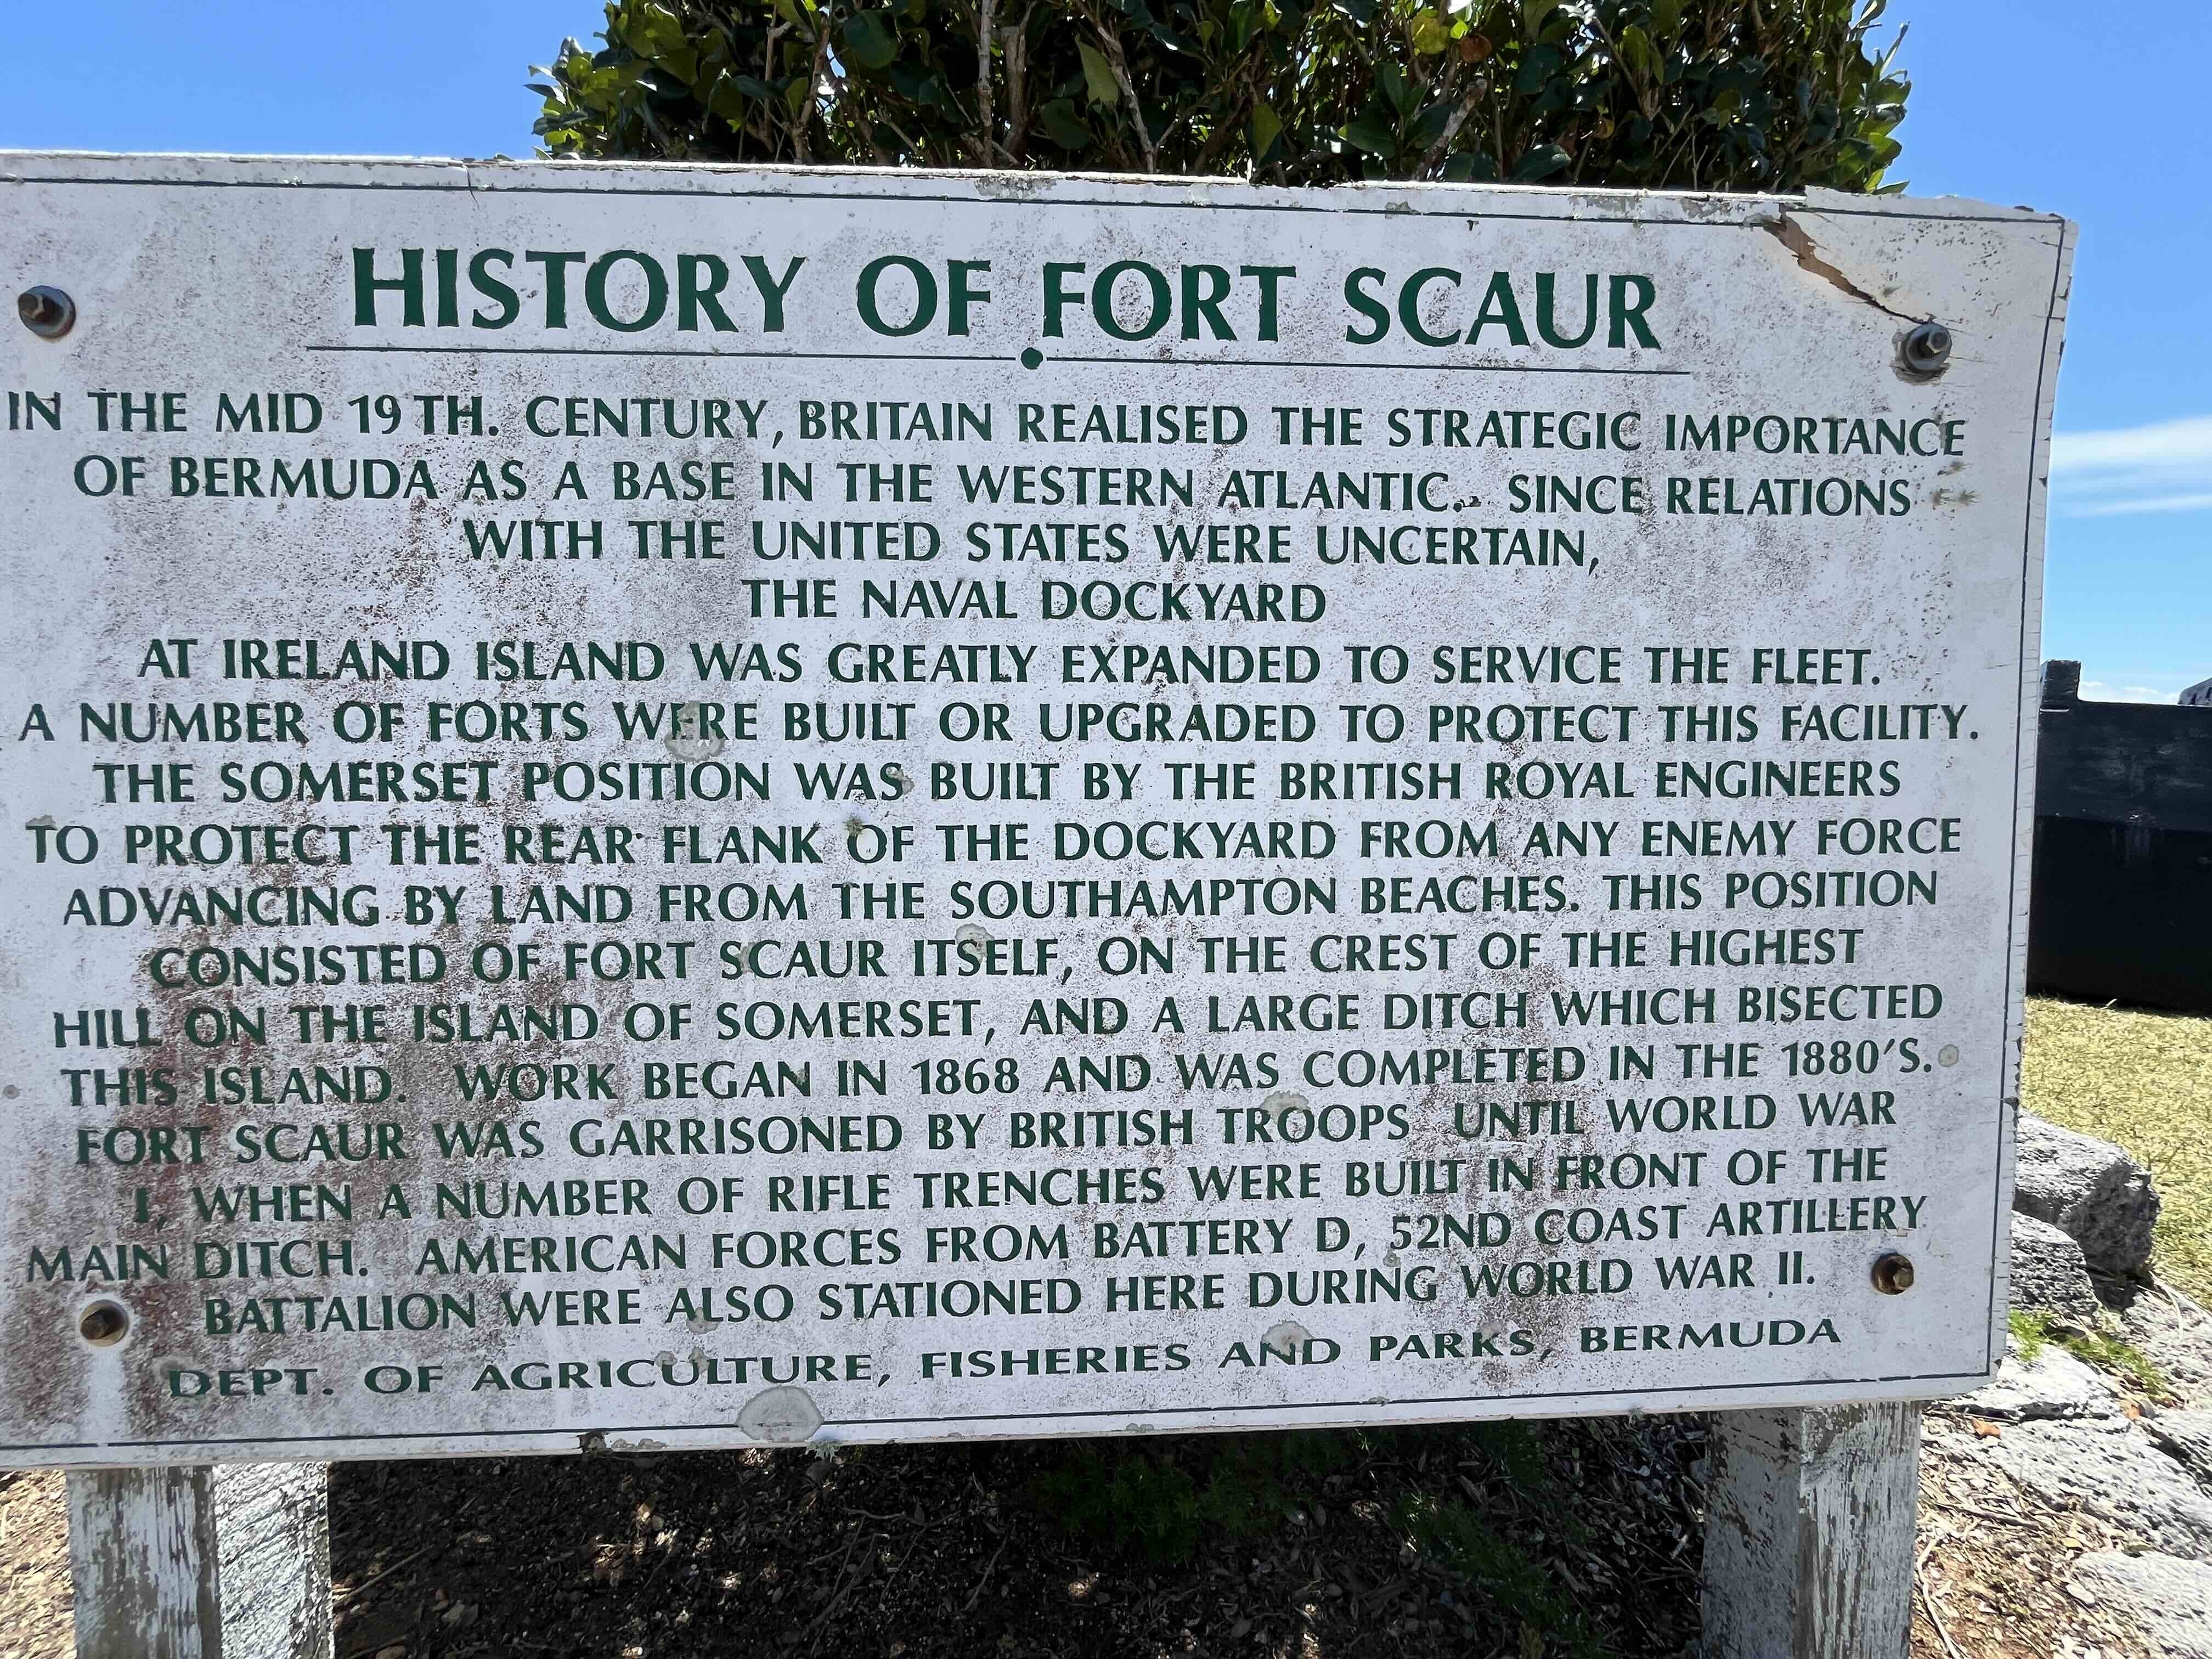 Fort Scaur